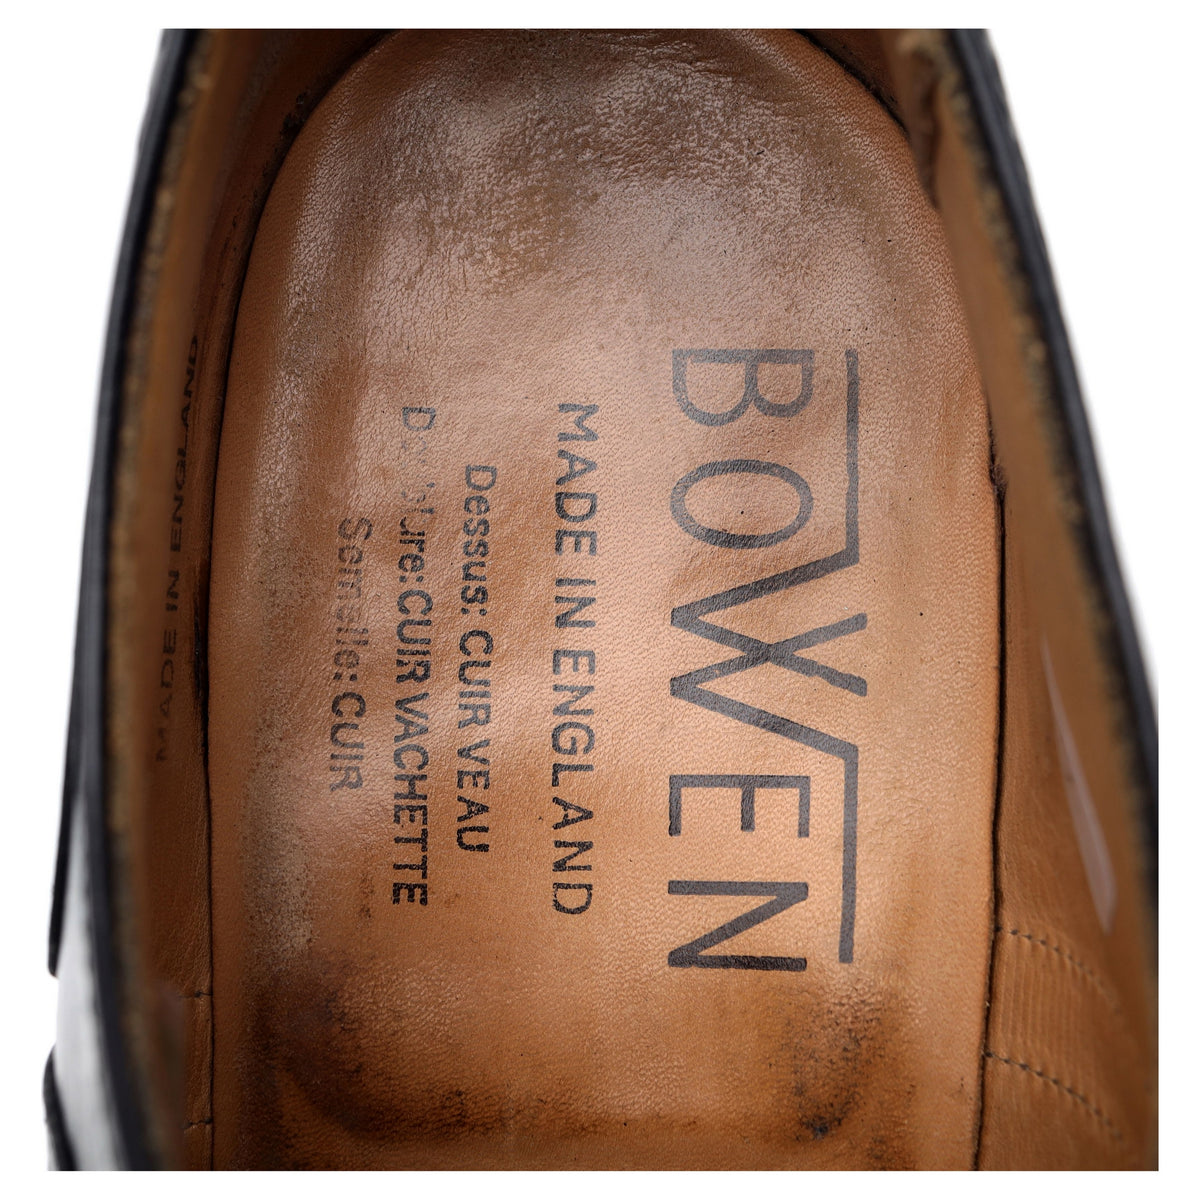 Bowen Black Leather Oxford Brogues UK 7.5